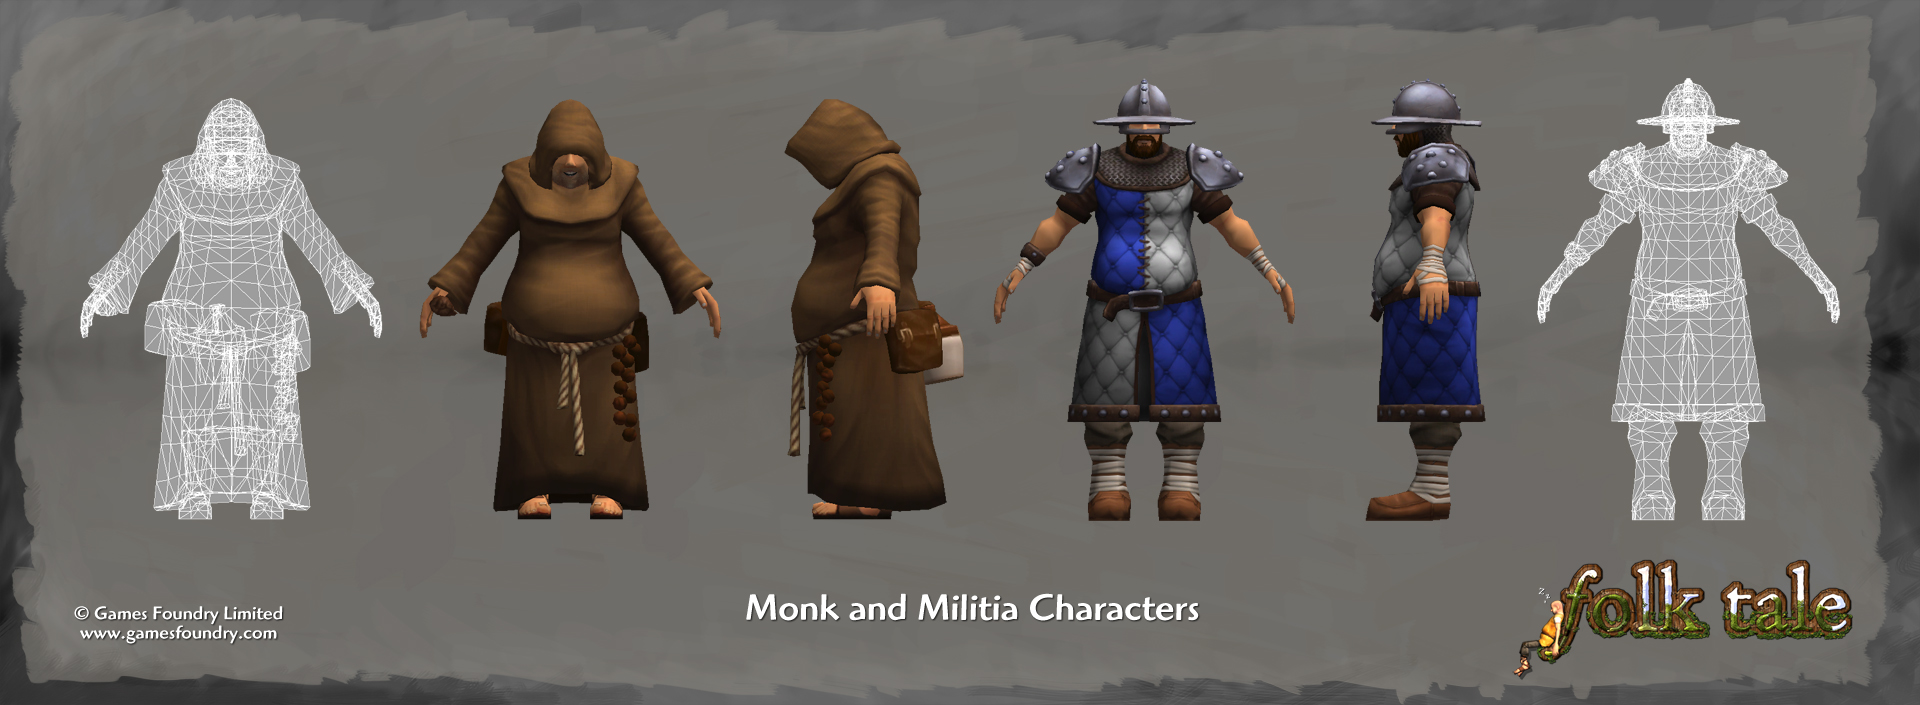 Folk Tales Characters